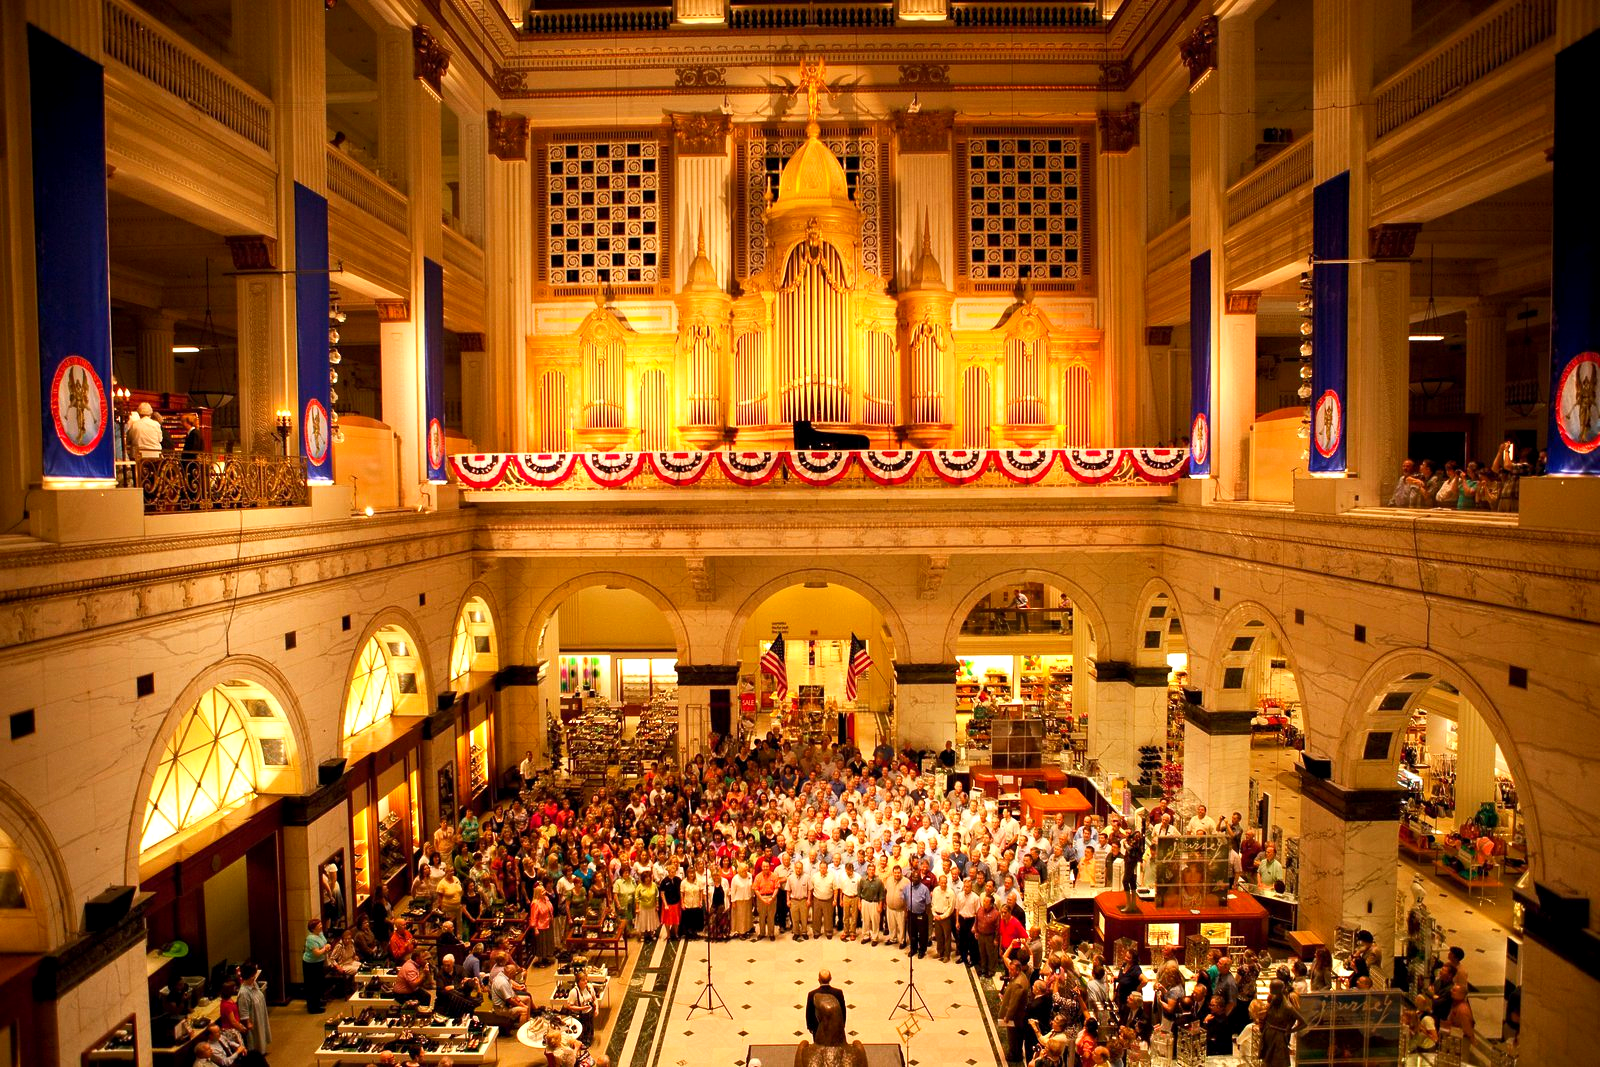 World's largest operating pipe organ: Philadelphia’s Wanamaker Organ sets world record